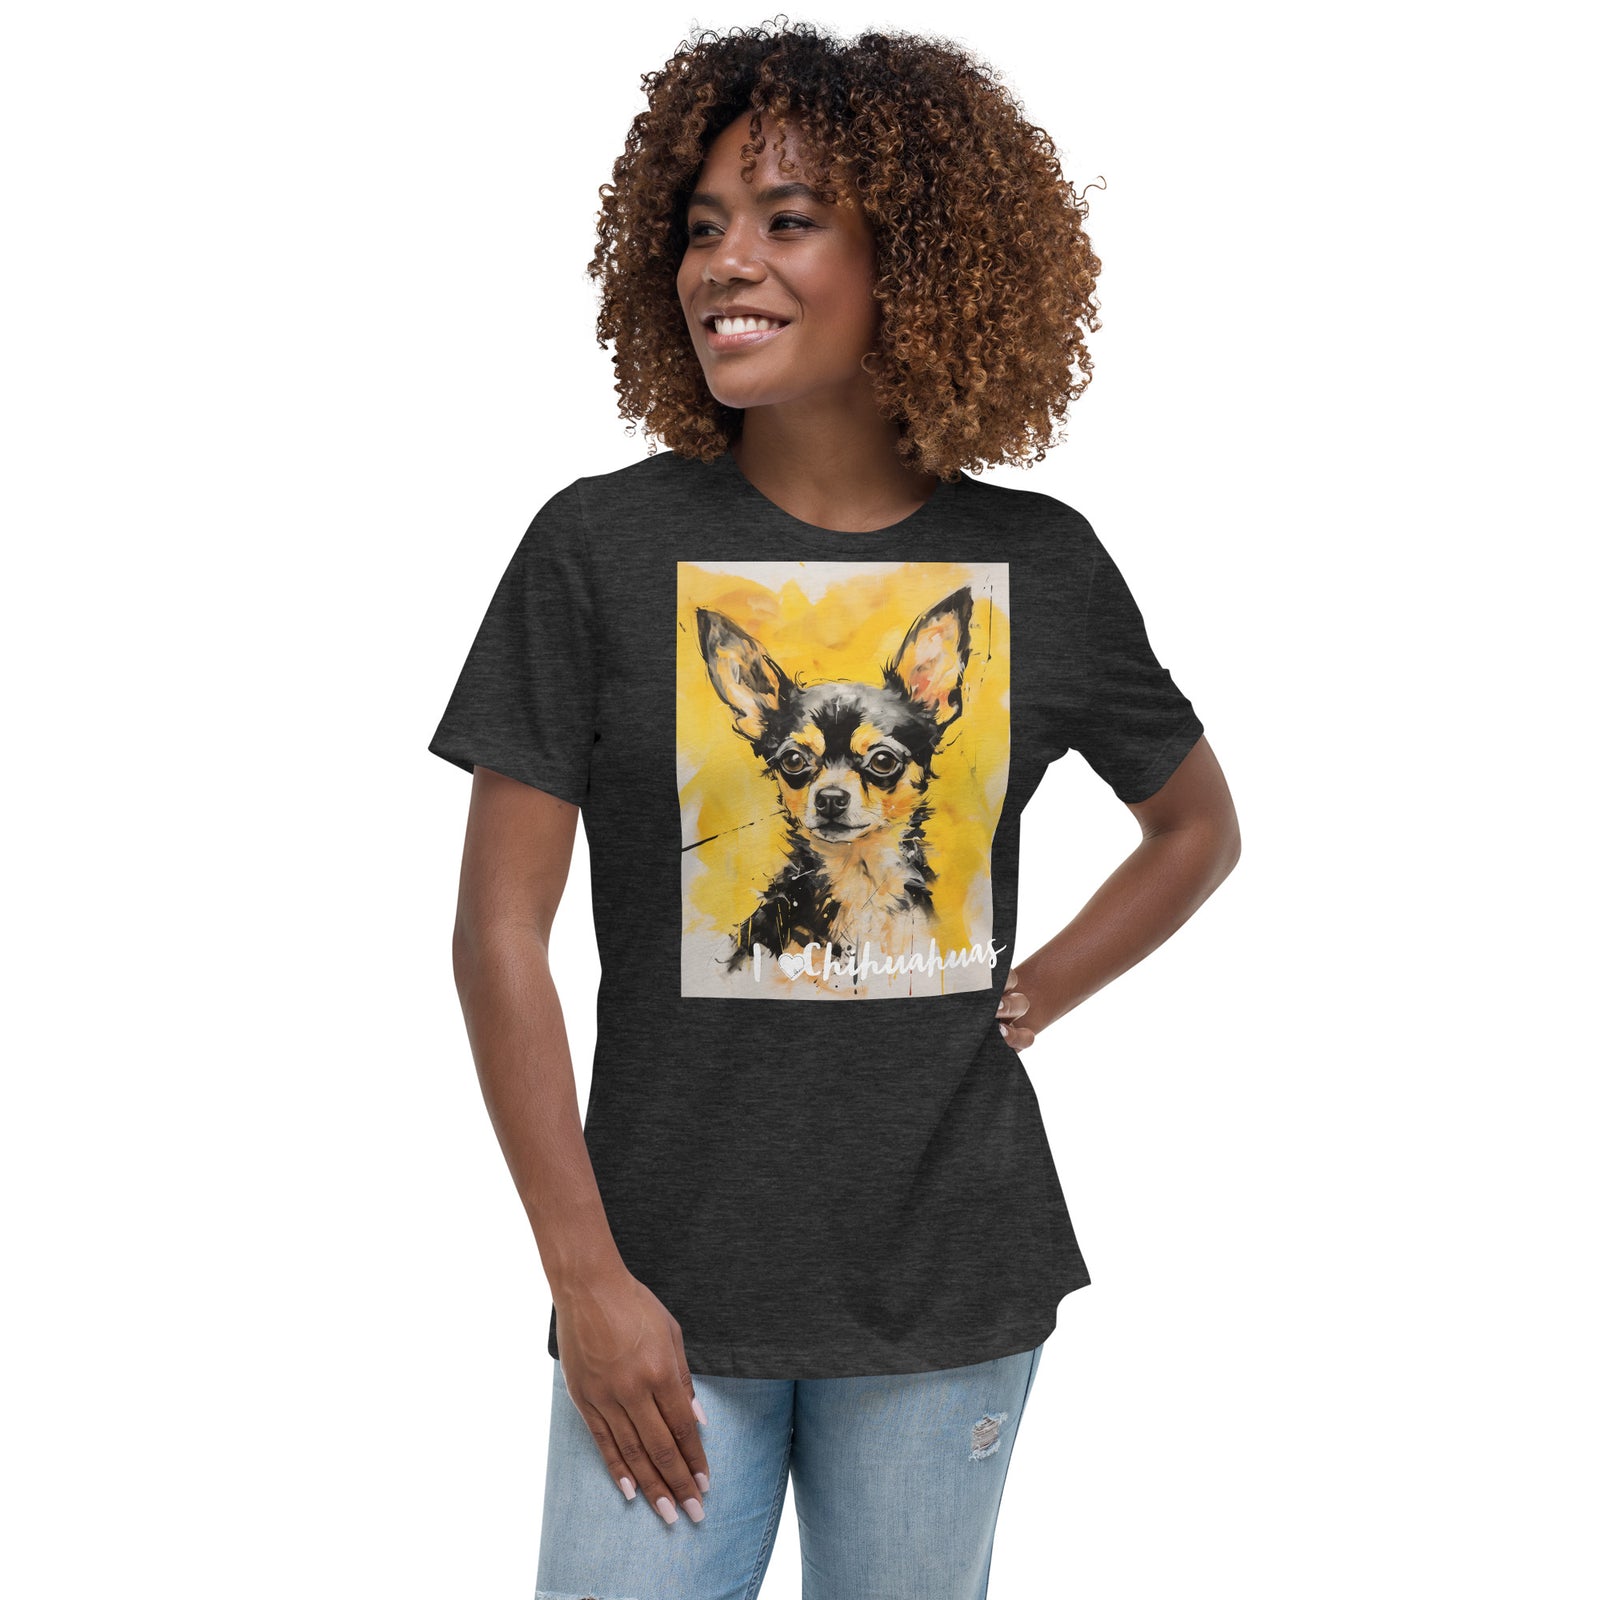 Women's Relaxed T-Shirt - I ❤ Dogs - Chihuahua